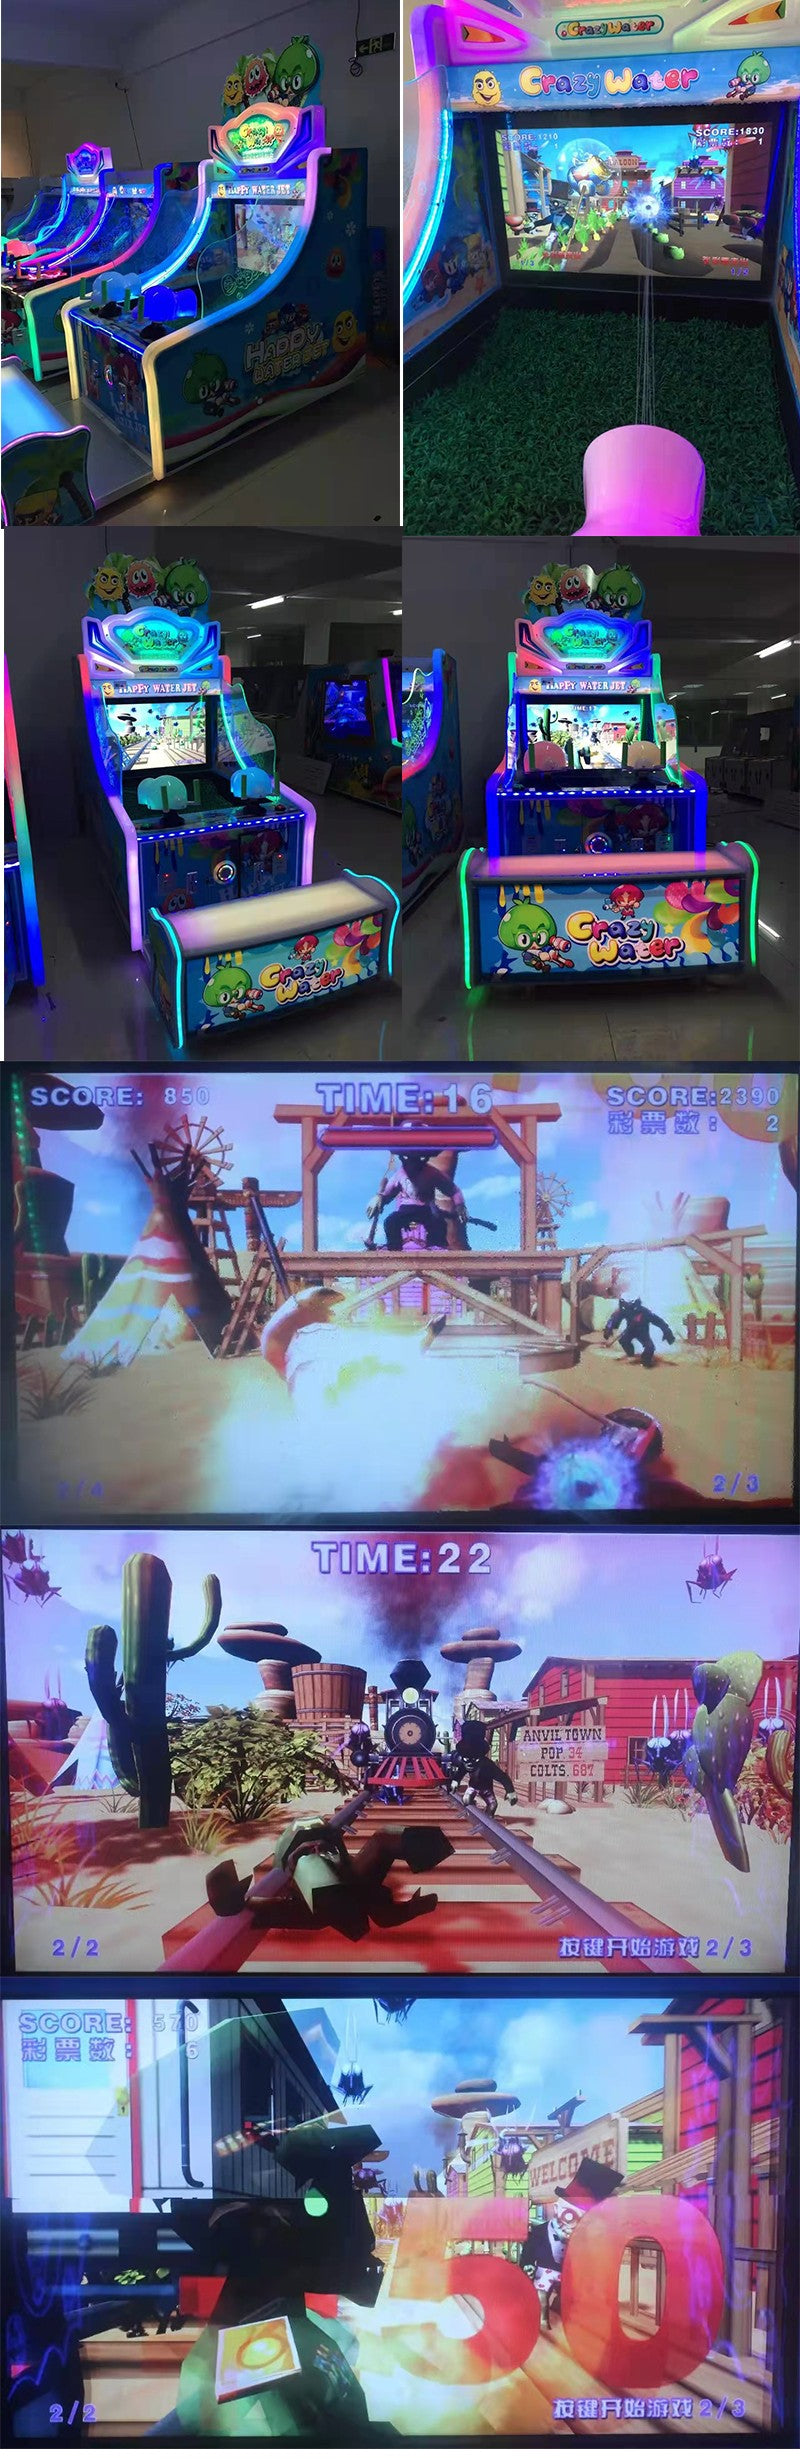 Crazy-Water-Shooting-Arcade-Hot-Sale-Family-Fun-game-machine-Tomy-Arcade